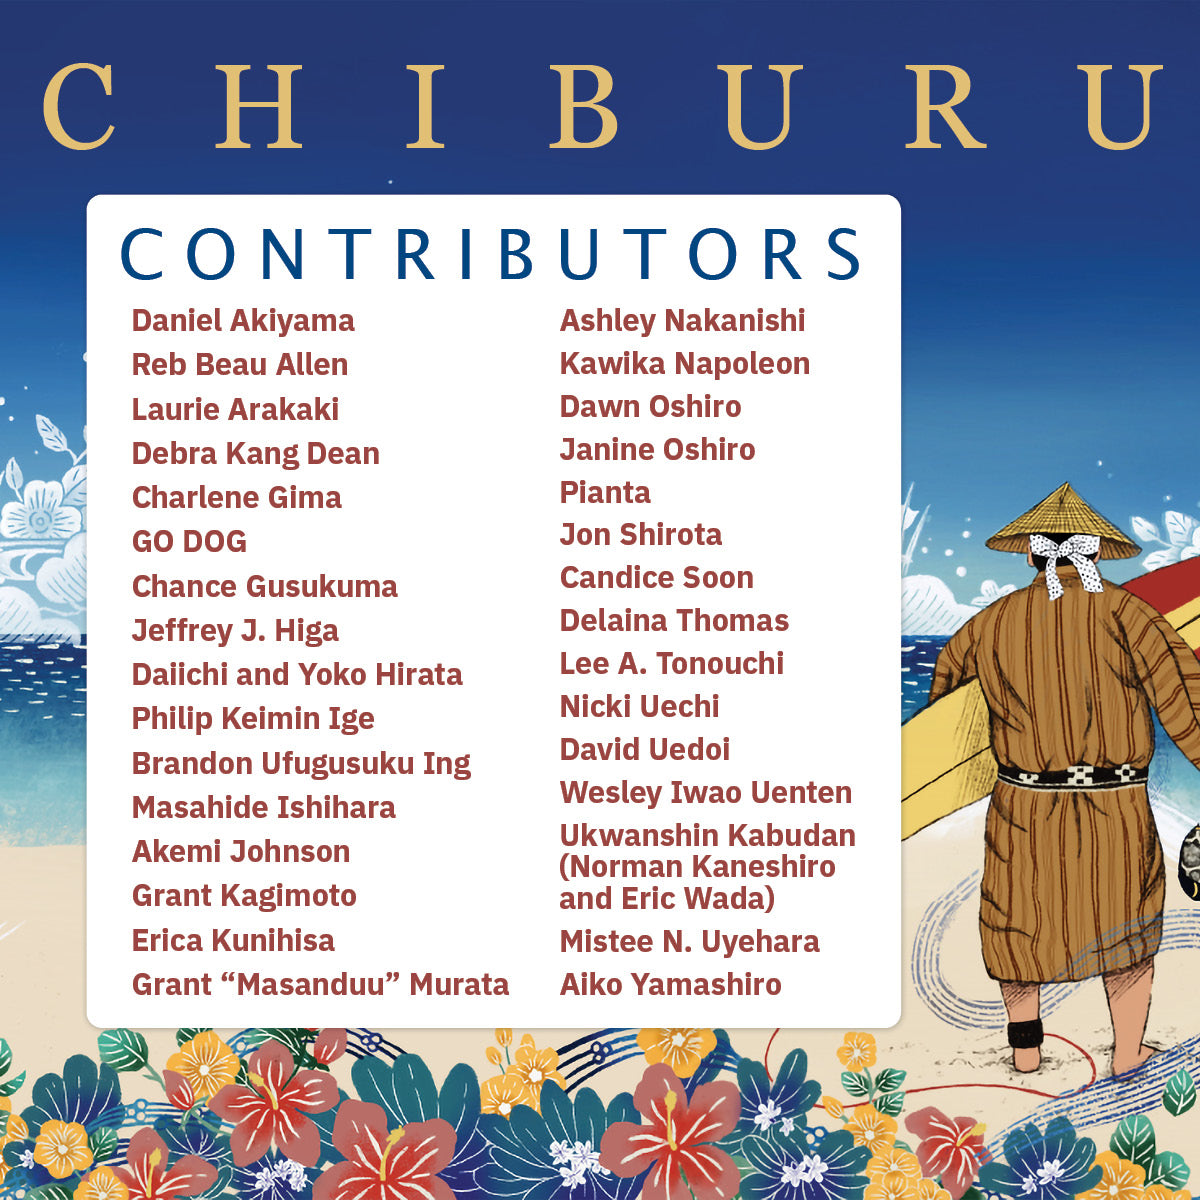 CHIBURU: Anthology of Hawaiʻi Okinawan Literature